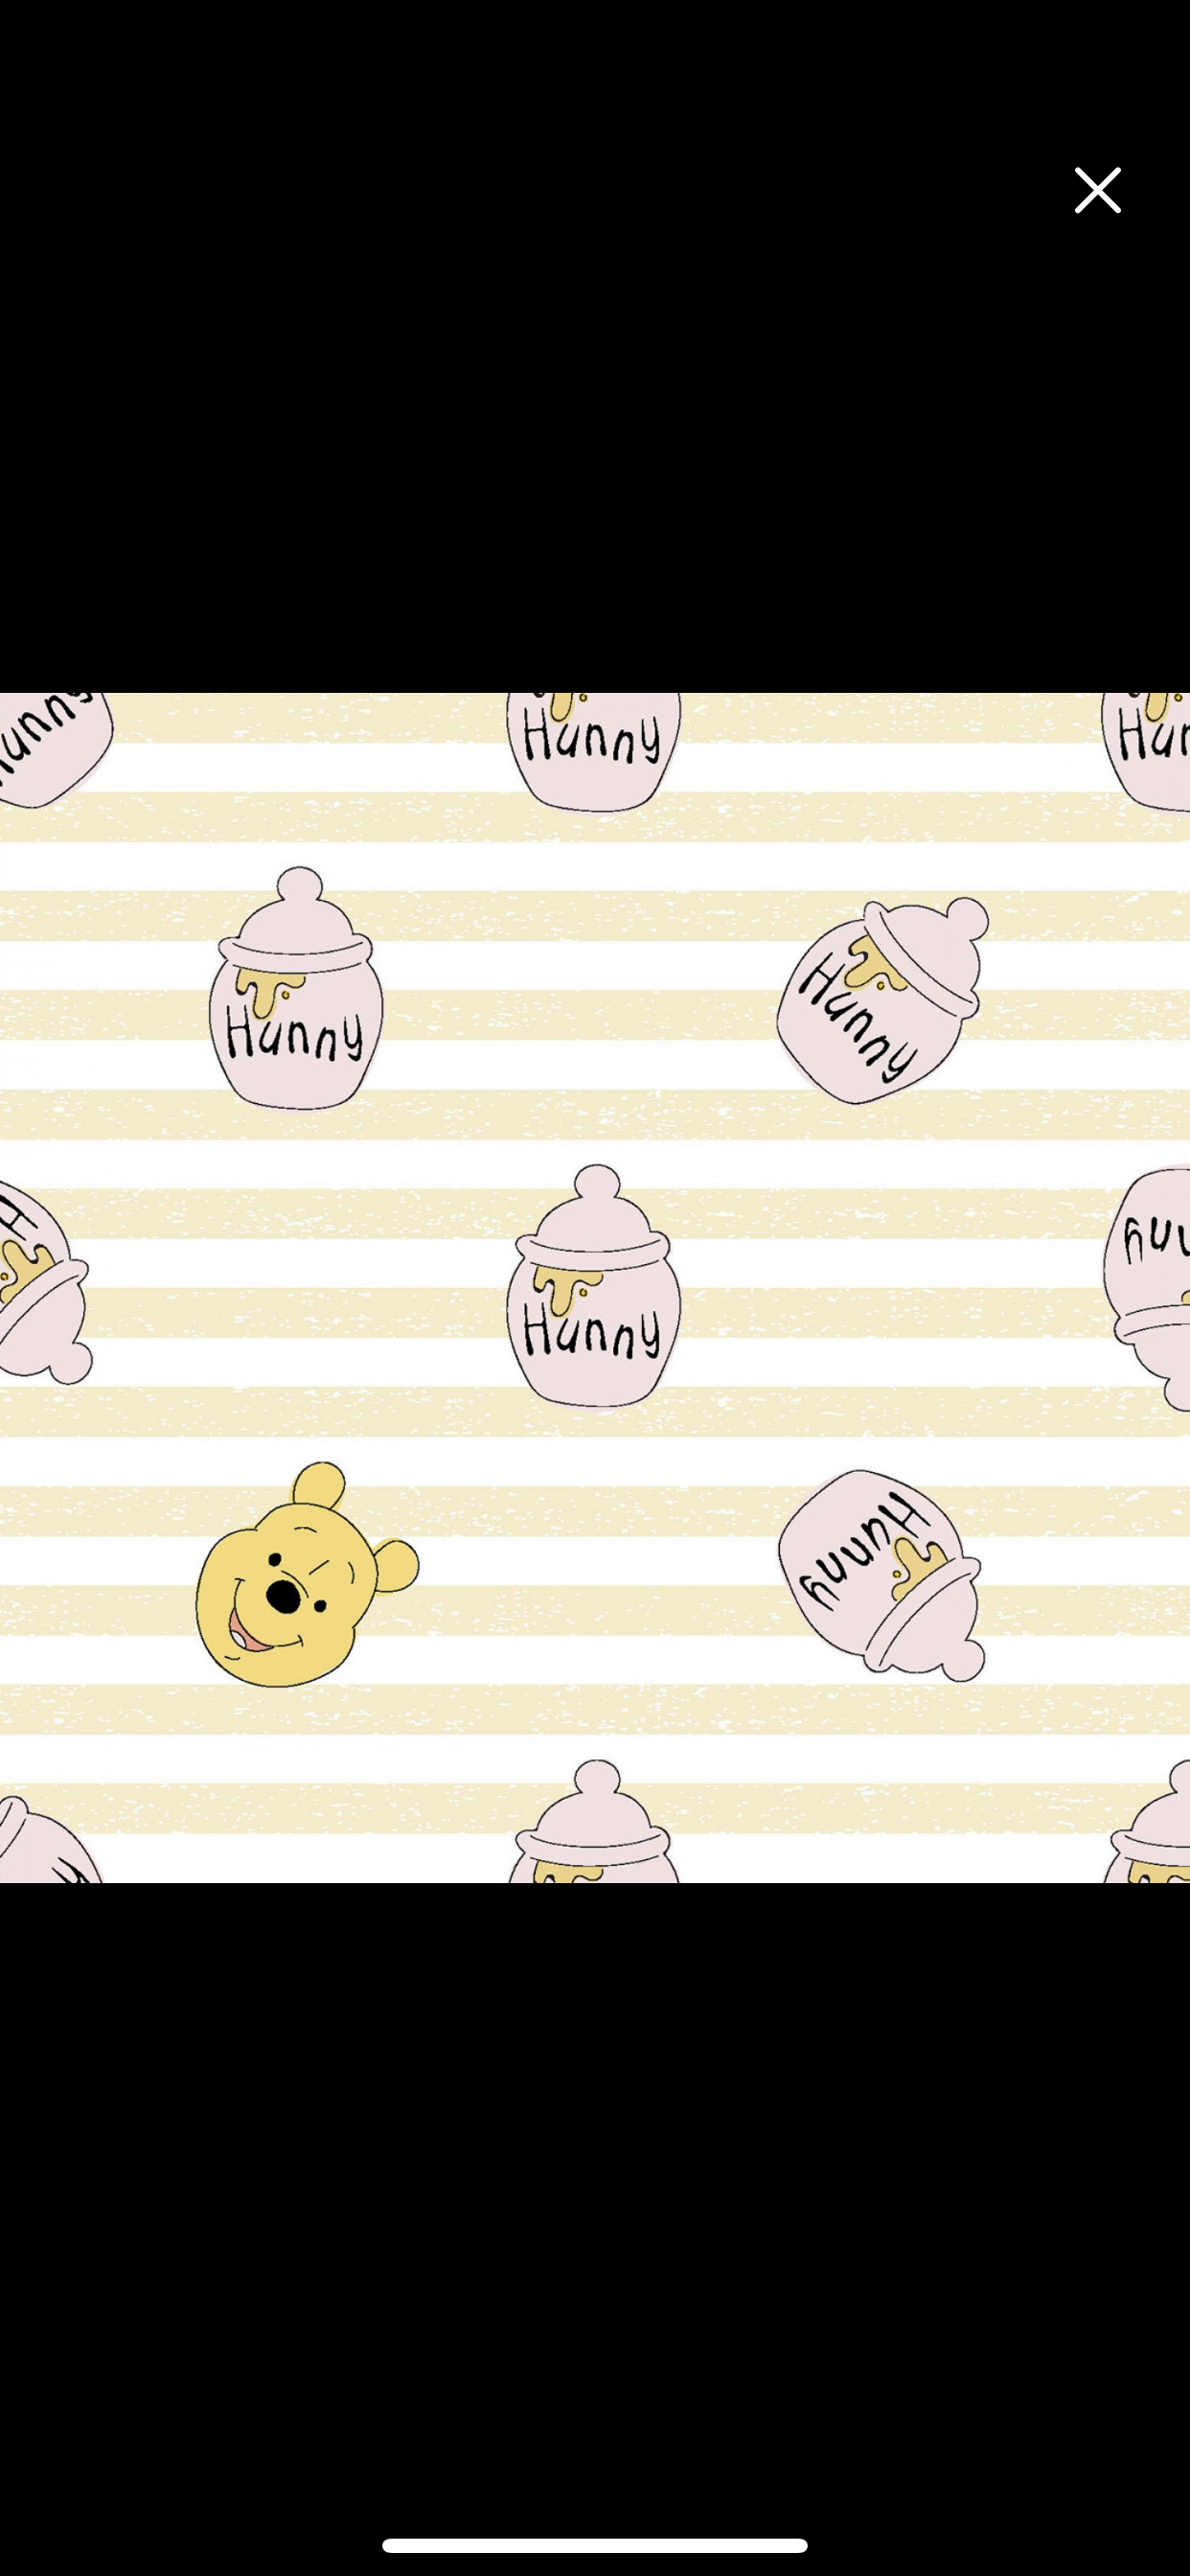 Springs Creative - Winnie the Pooh - Winnie the Pooh and Hunny - Stripes